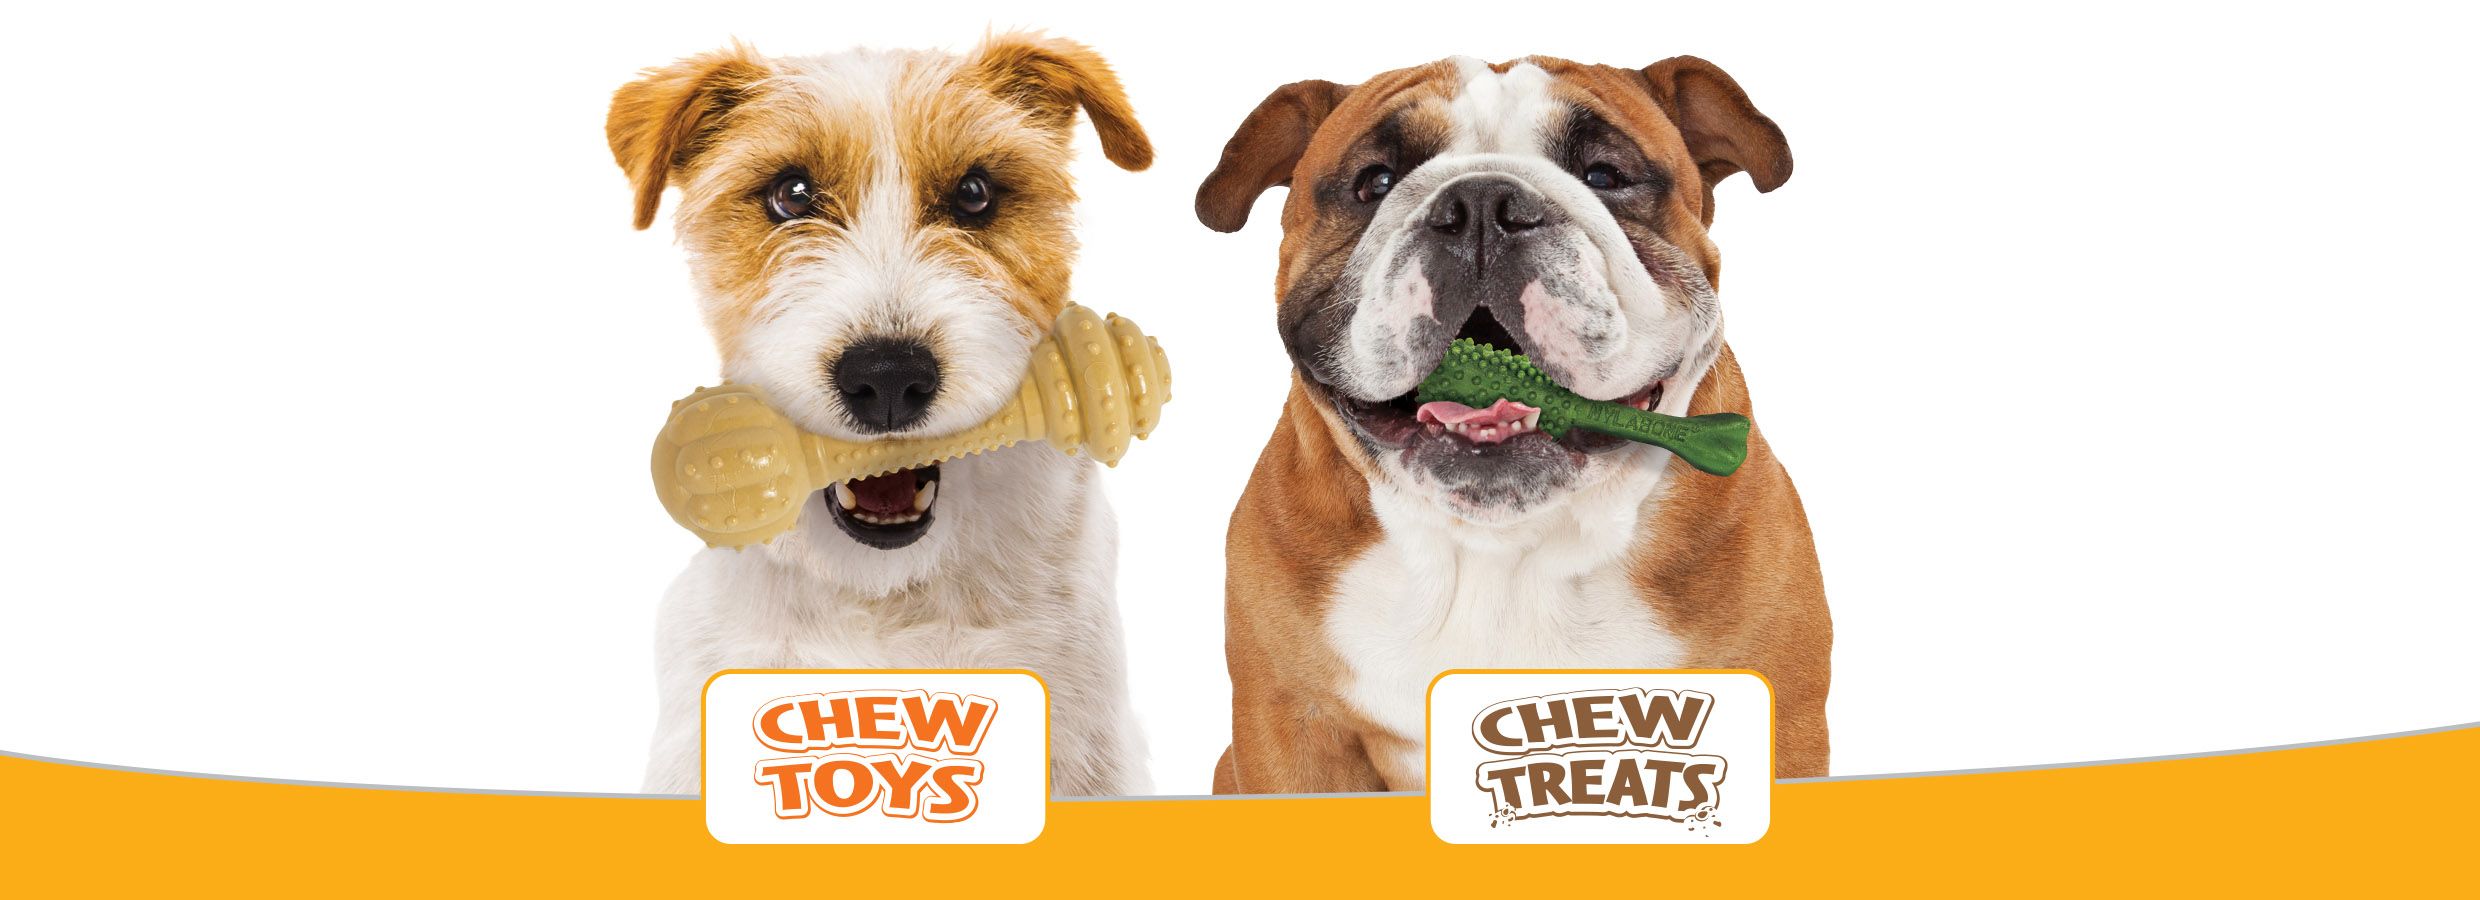 nylabone dog chews